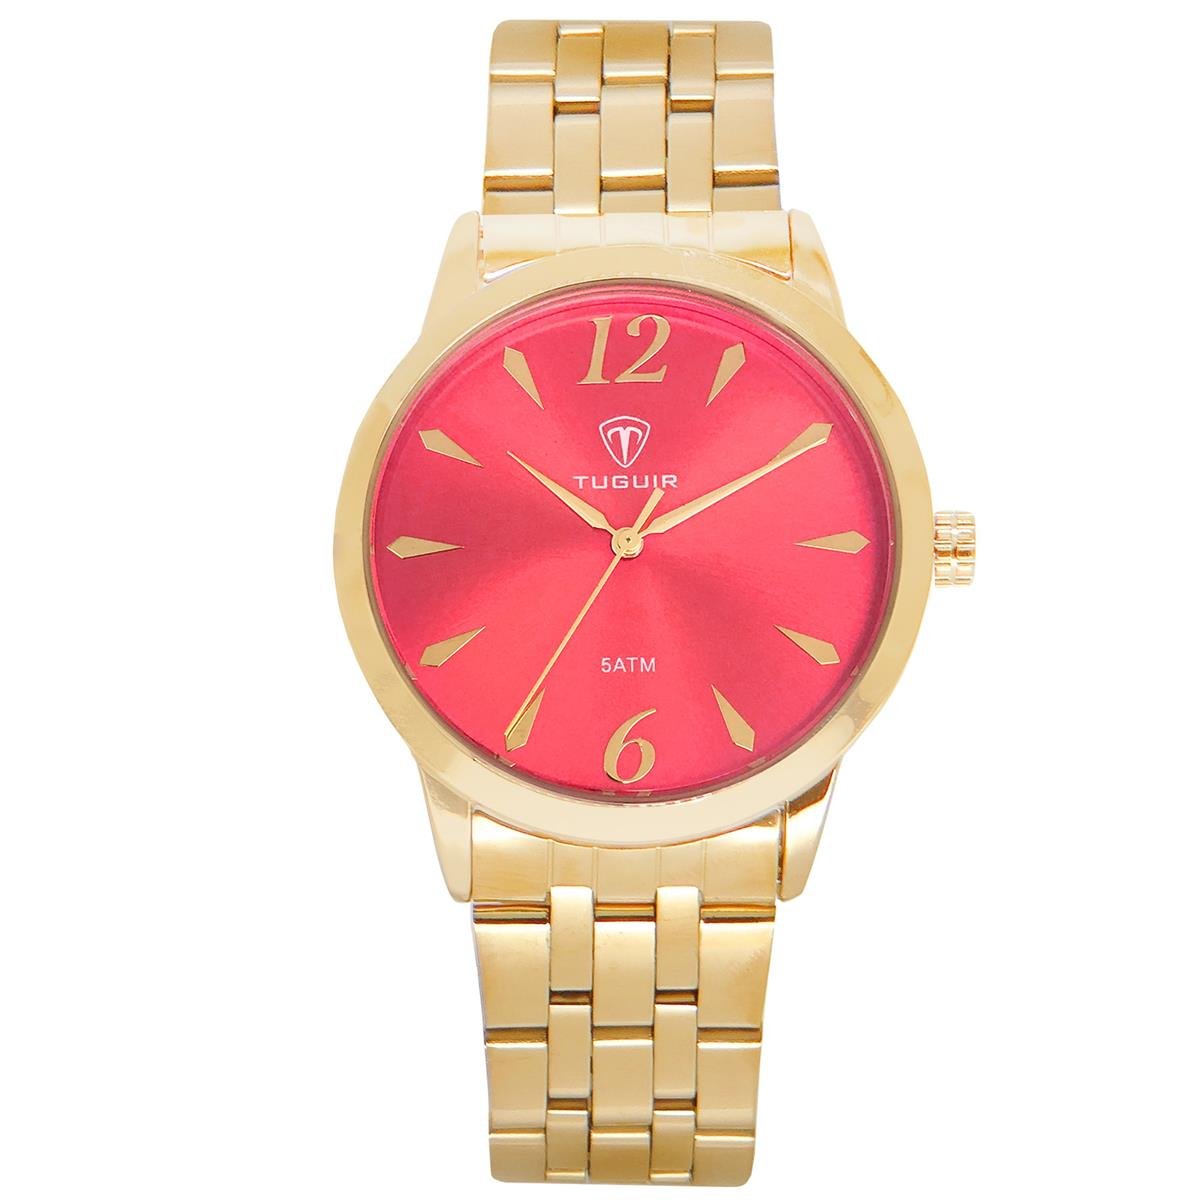 Relógio Tuguir Feminino Ref: Tg141 Tg30102 Casual Dourado Dourado 2